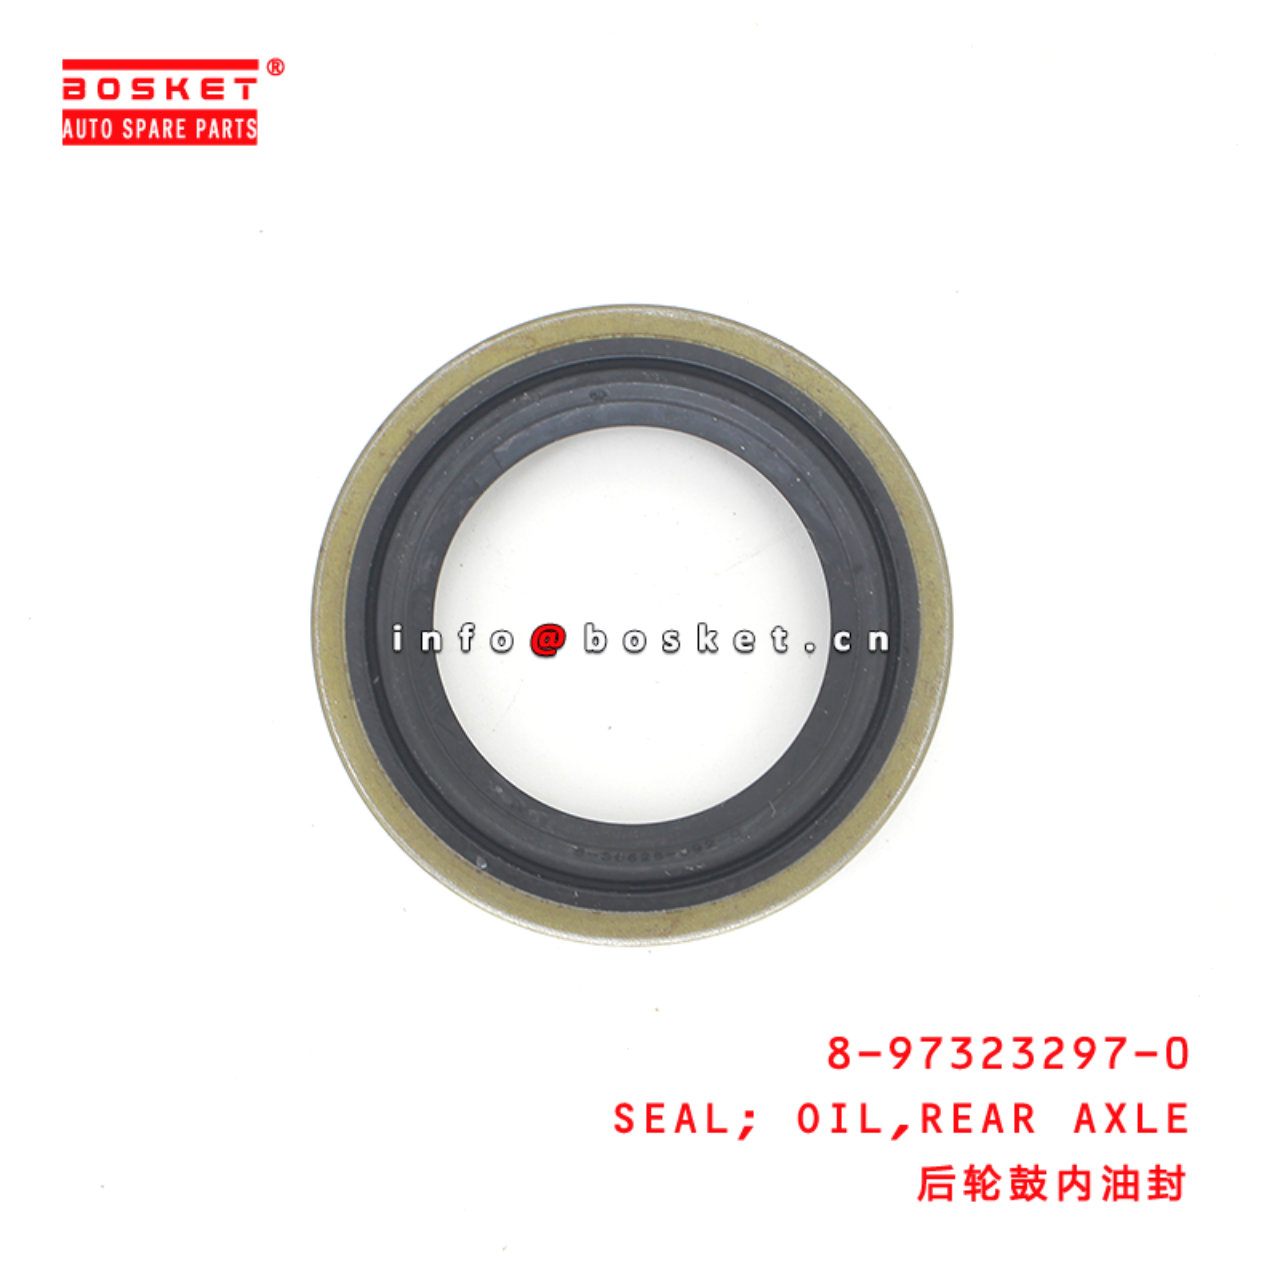 8-97323297-0 Rear Axle Oil Seal suitable for ISUZU...